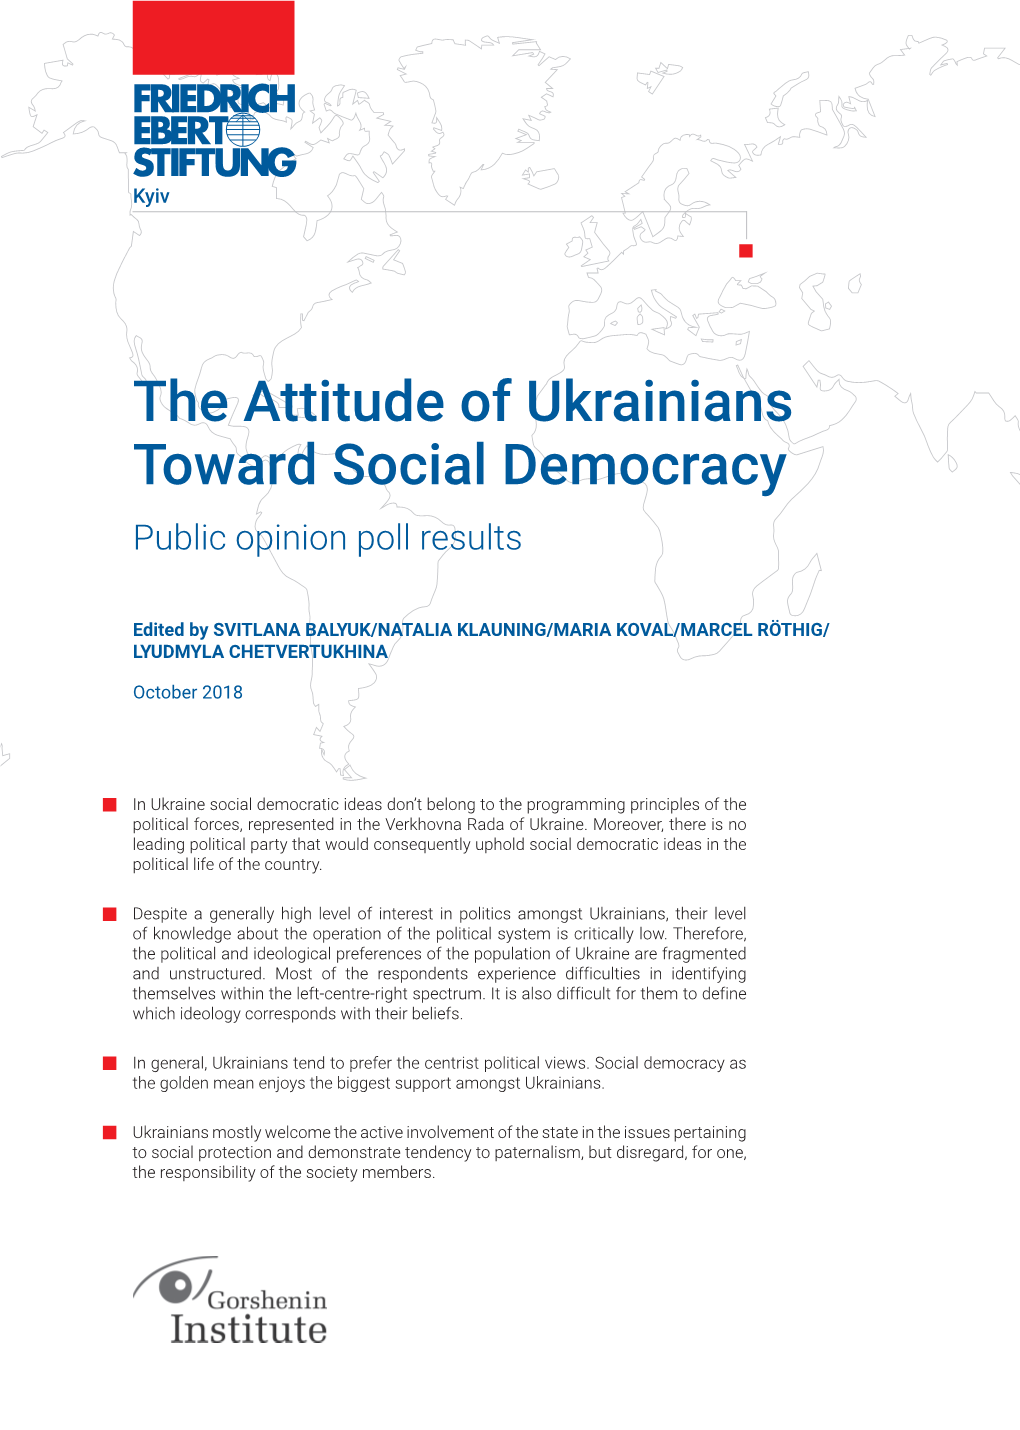 The Attitude of Ukrainians Toward Social Democracy Public Opinion Poll Results